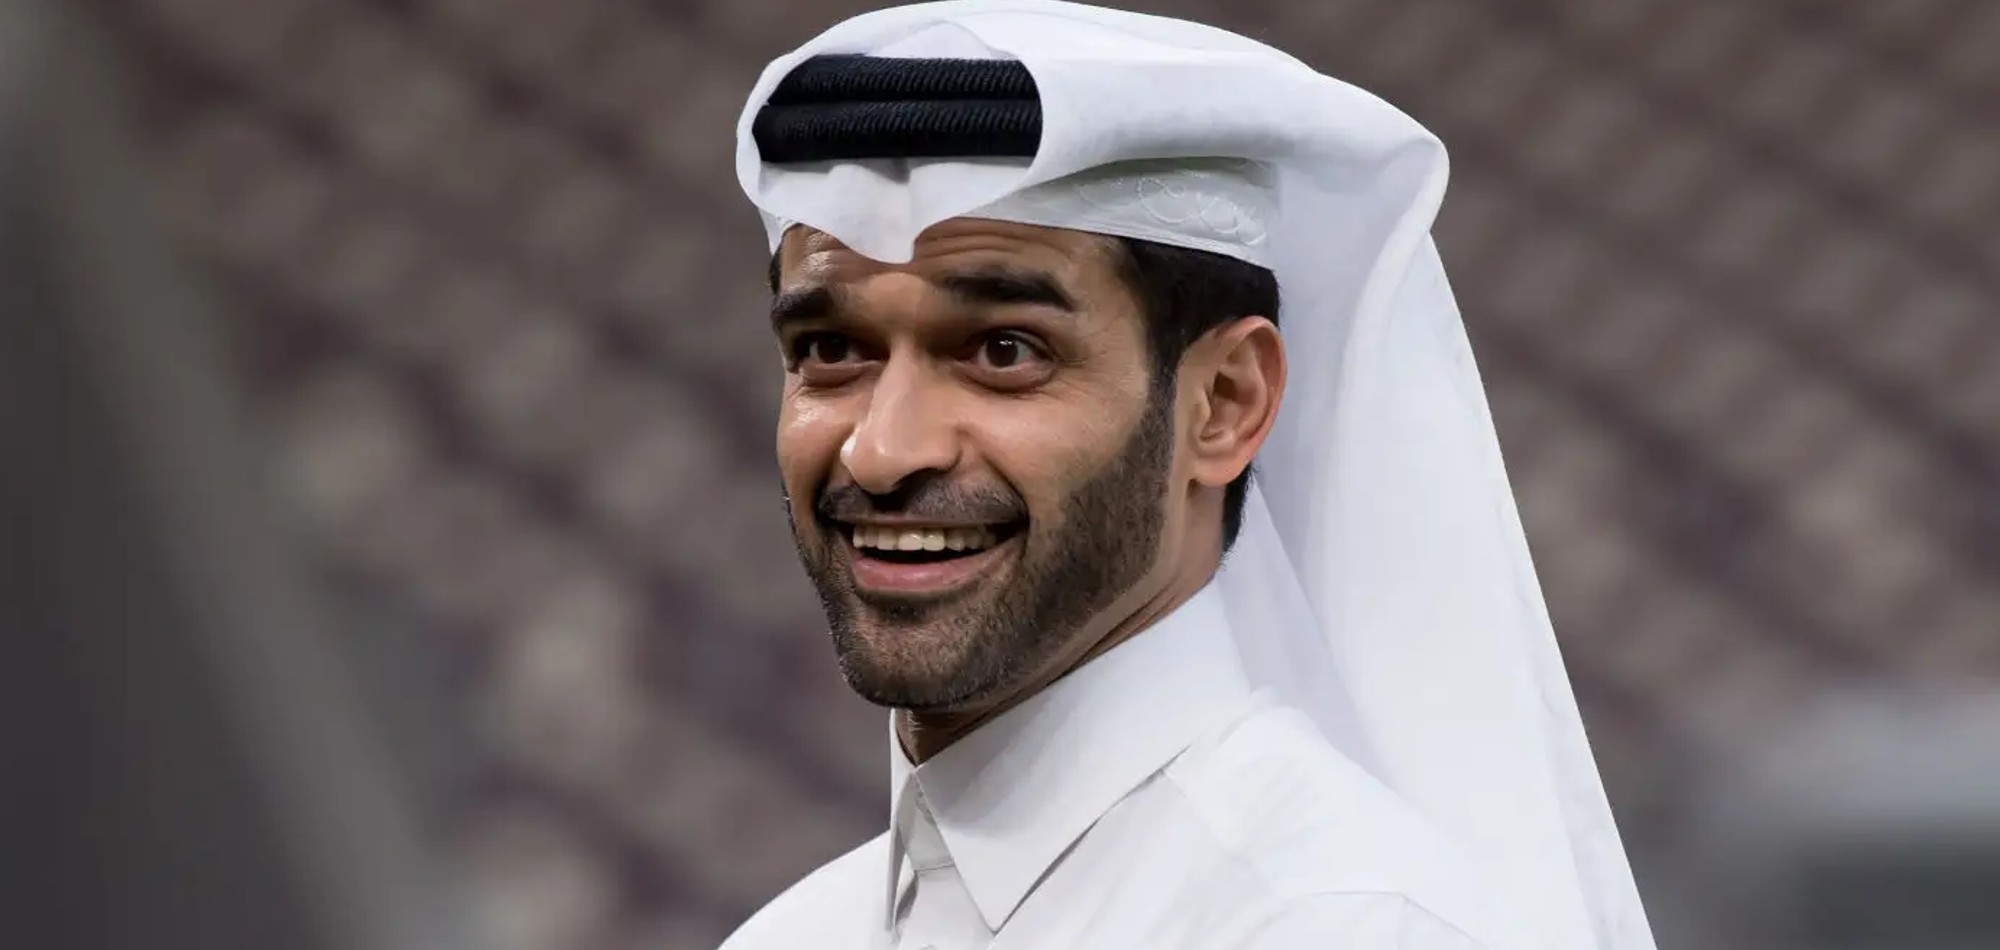 World Soccer Magazine : Hassan Al-Thawadi, The man behind Qatar’s hosting of the 2022 World Cup